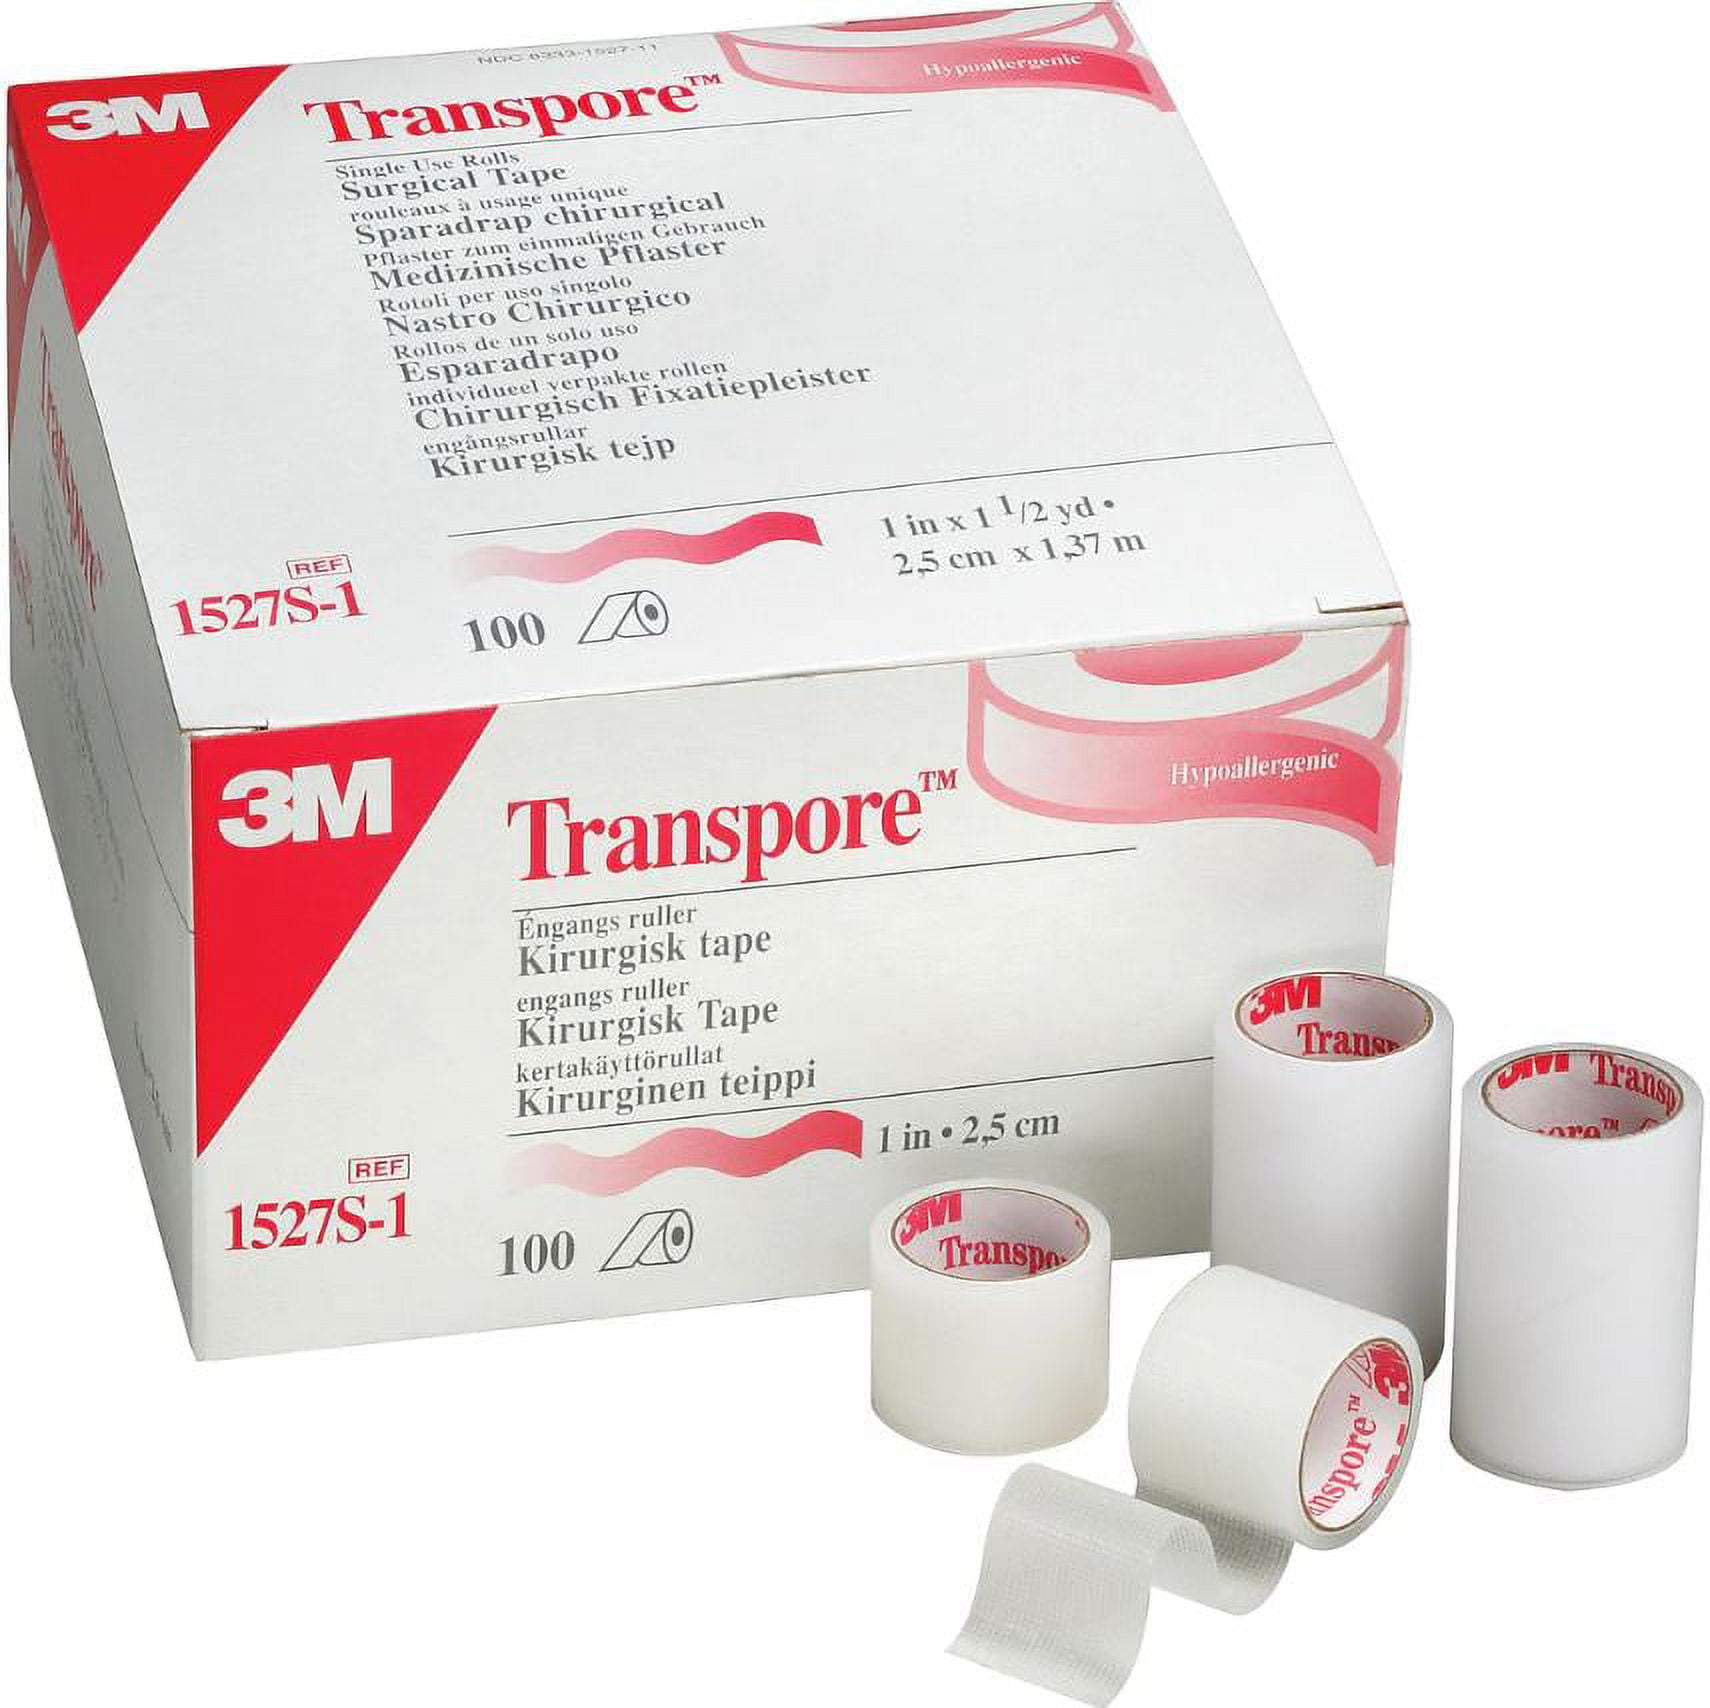 3M Transpore Medical Tape 1 x 10 Yd 1527-1, 1 Box, 12 Rolls/Box, 1 Inch X  10 Yard - Gerbes Super Markets